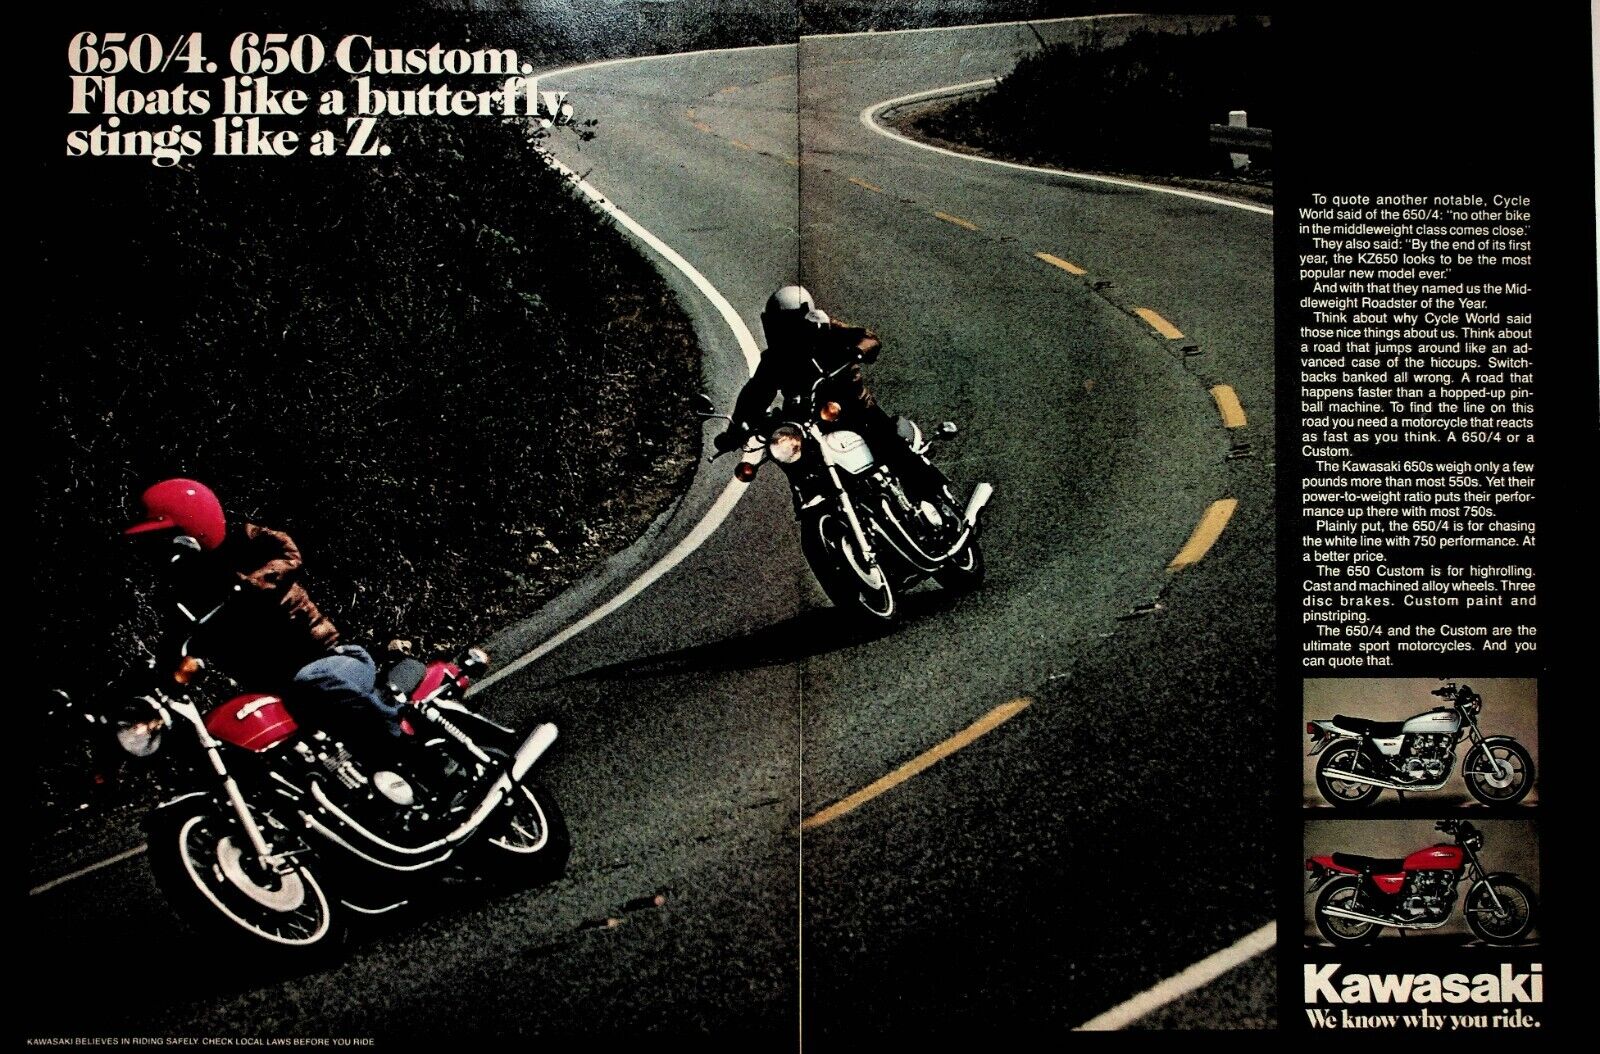 1978 Kawasaki KZ650 650 Four Custom - 2-Page Vintage Motorcycle Ad